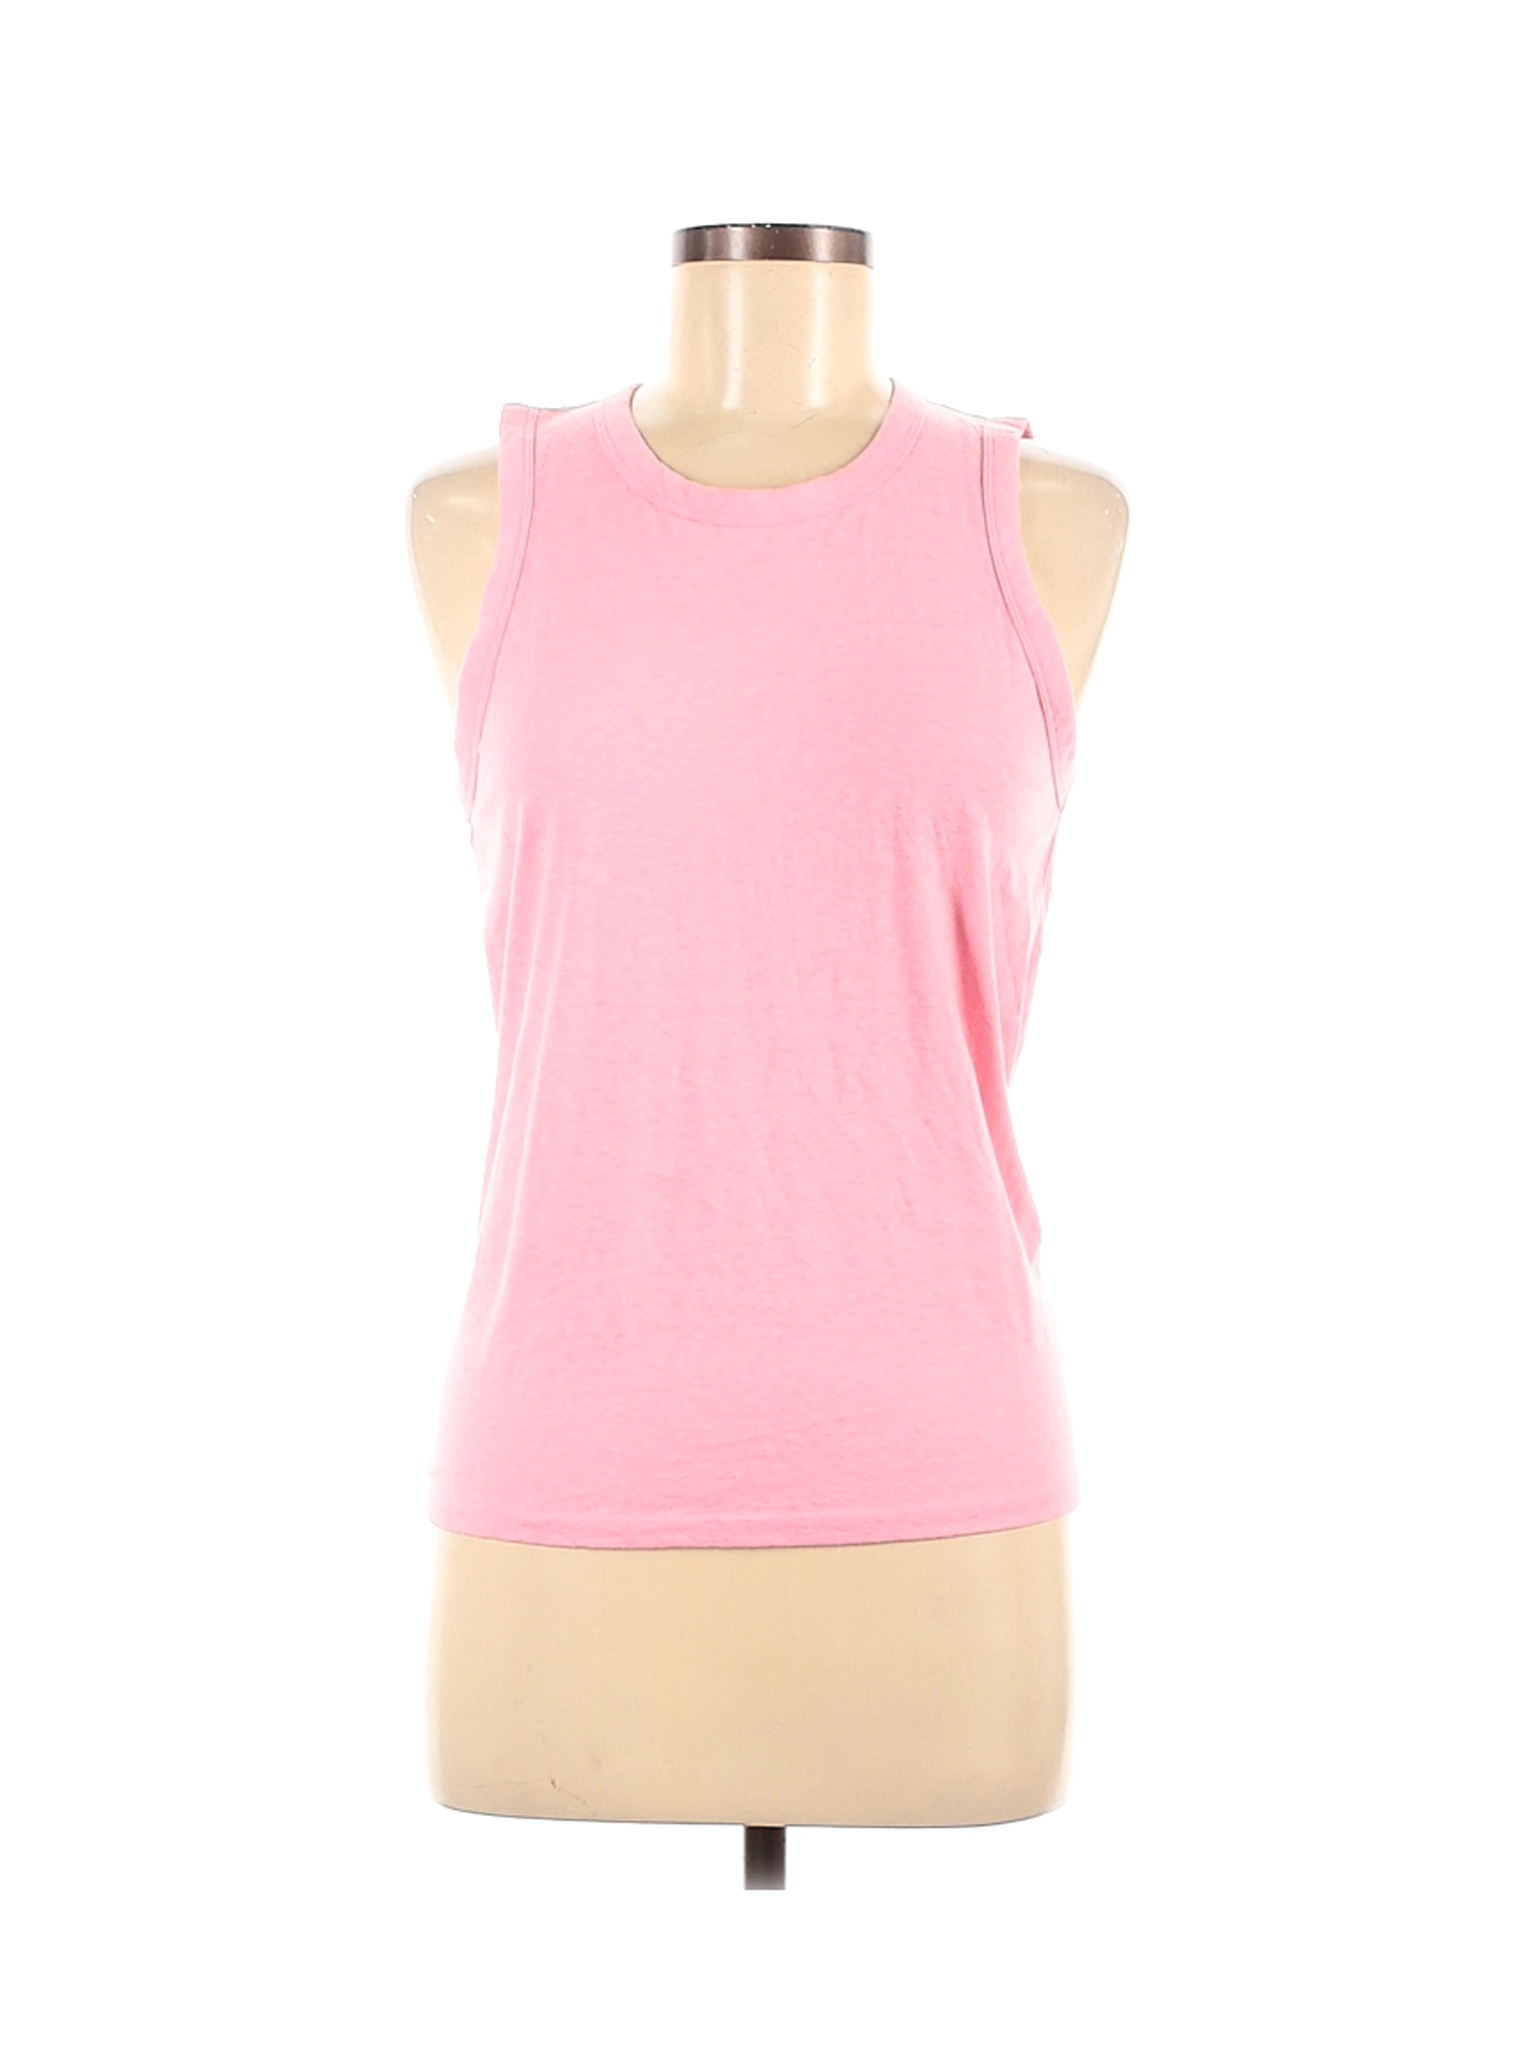 J.Crew Women Pink Sleeveless T-Shirt M | eBay